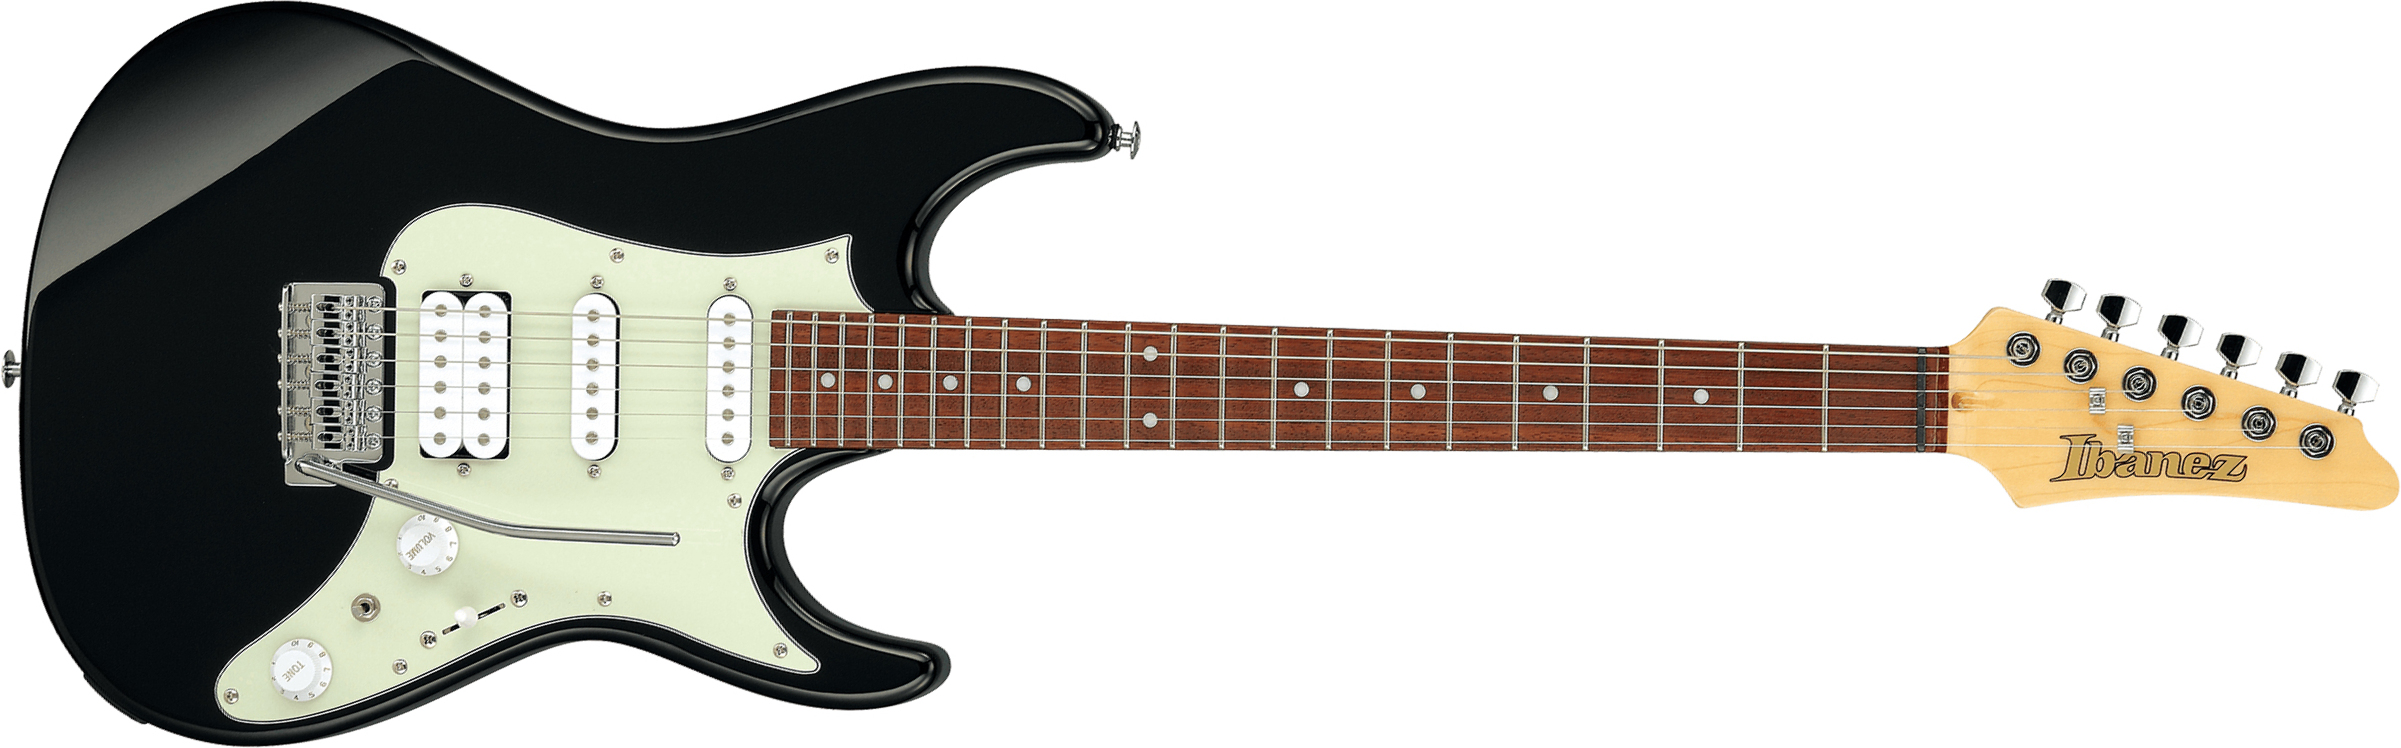 Ibanez Azes 40 Bk Standard Hss Trem Jat - Black - E-Gitarre in Str-Form - Main picture